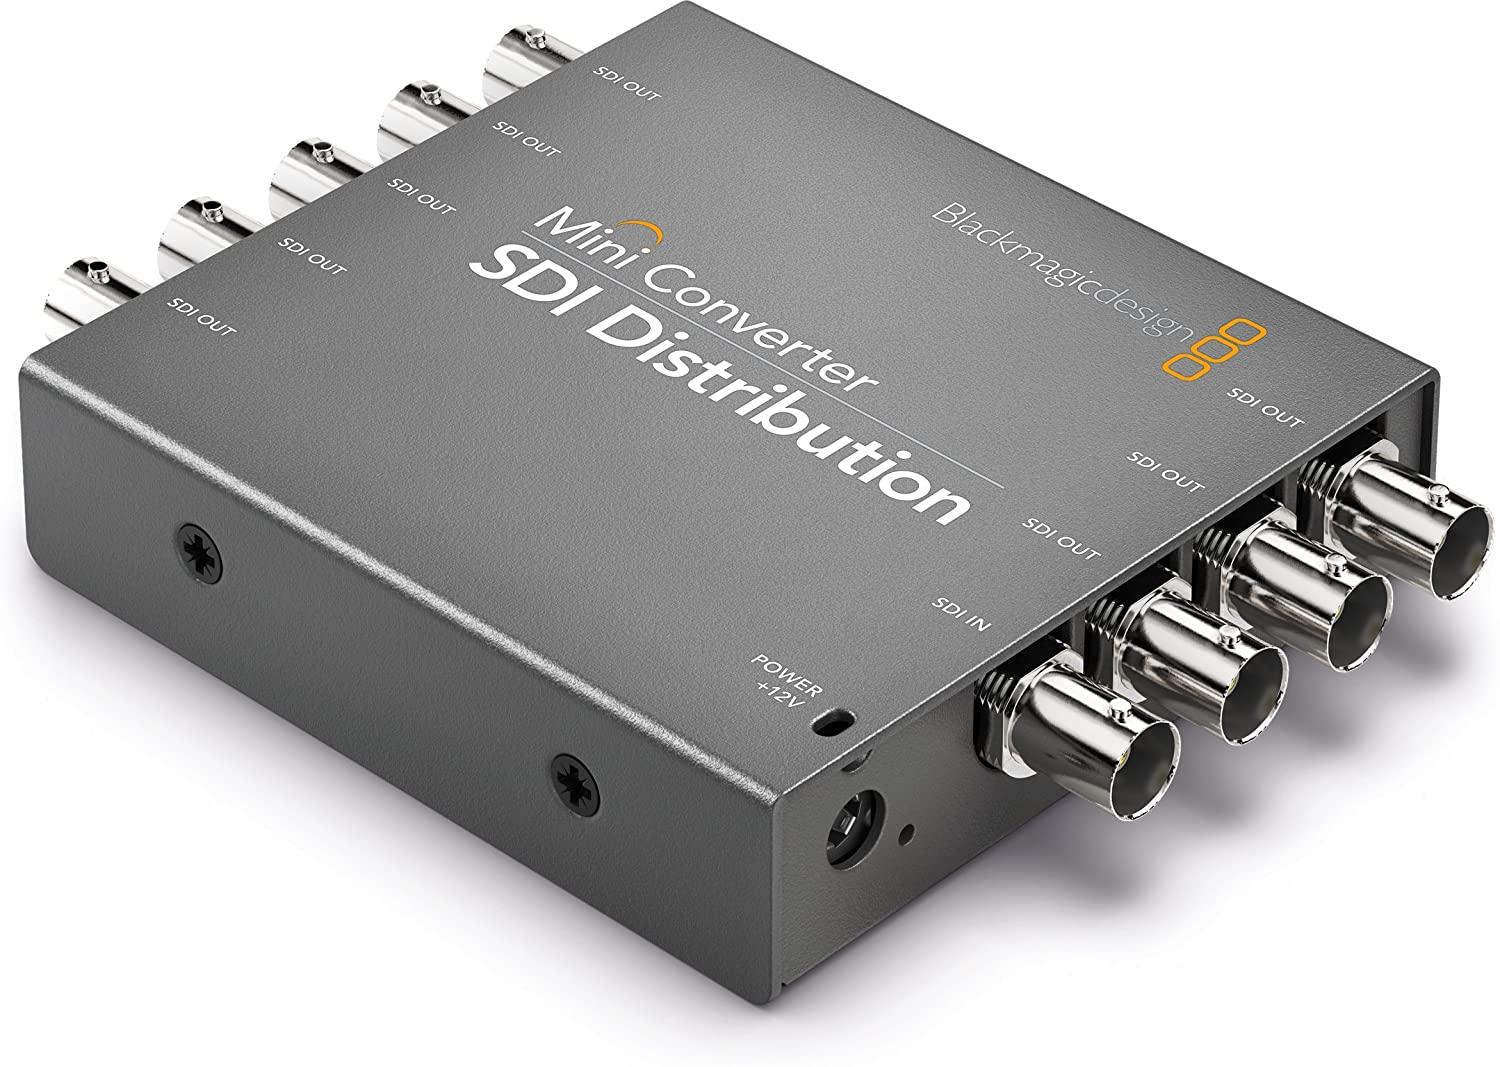 Blackmagic Design Converters Mini Converter - SDI Distribution